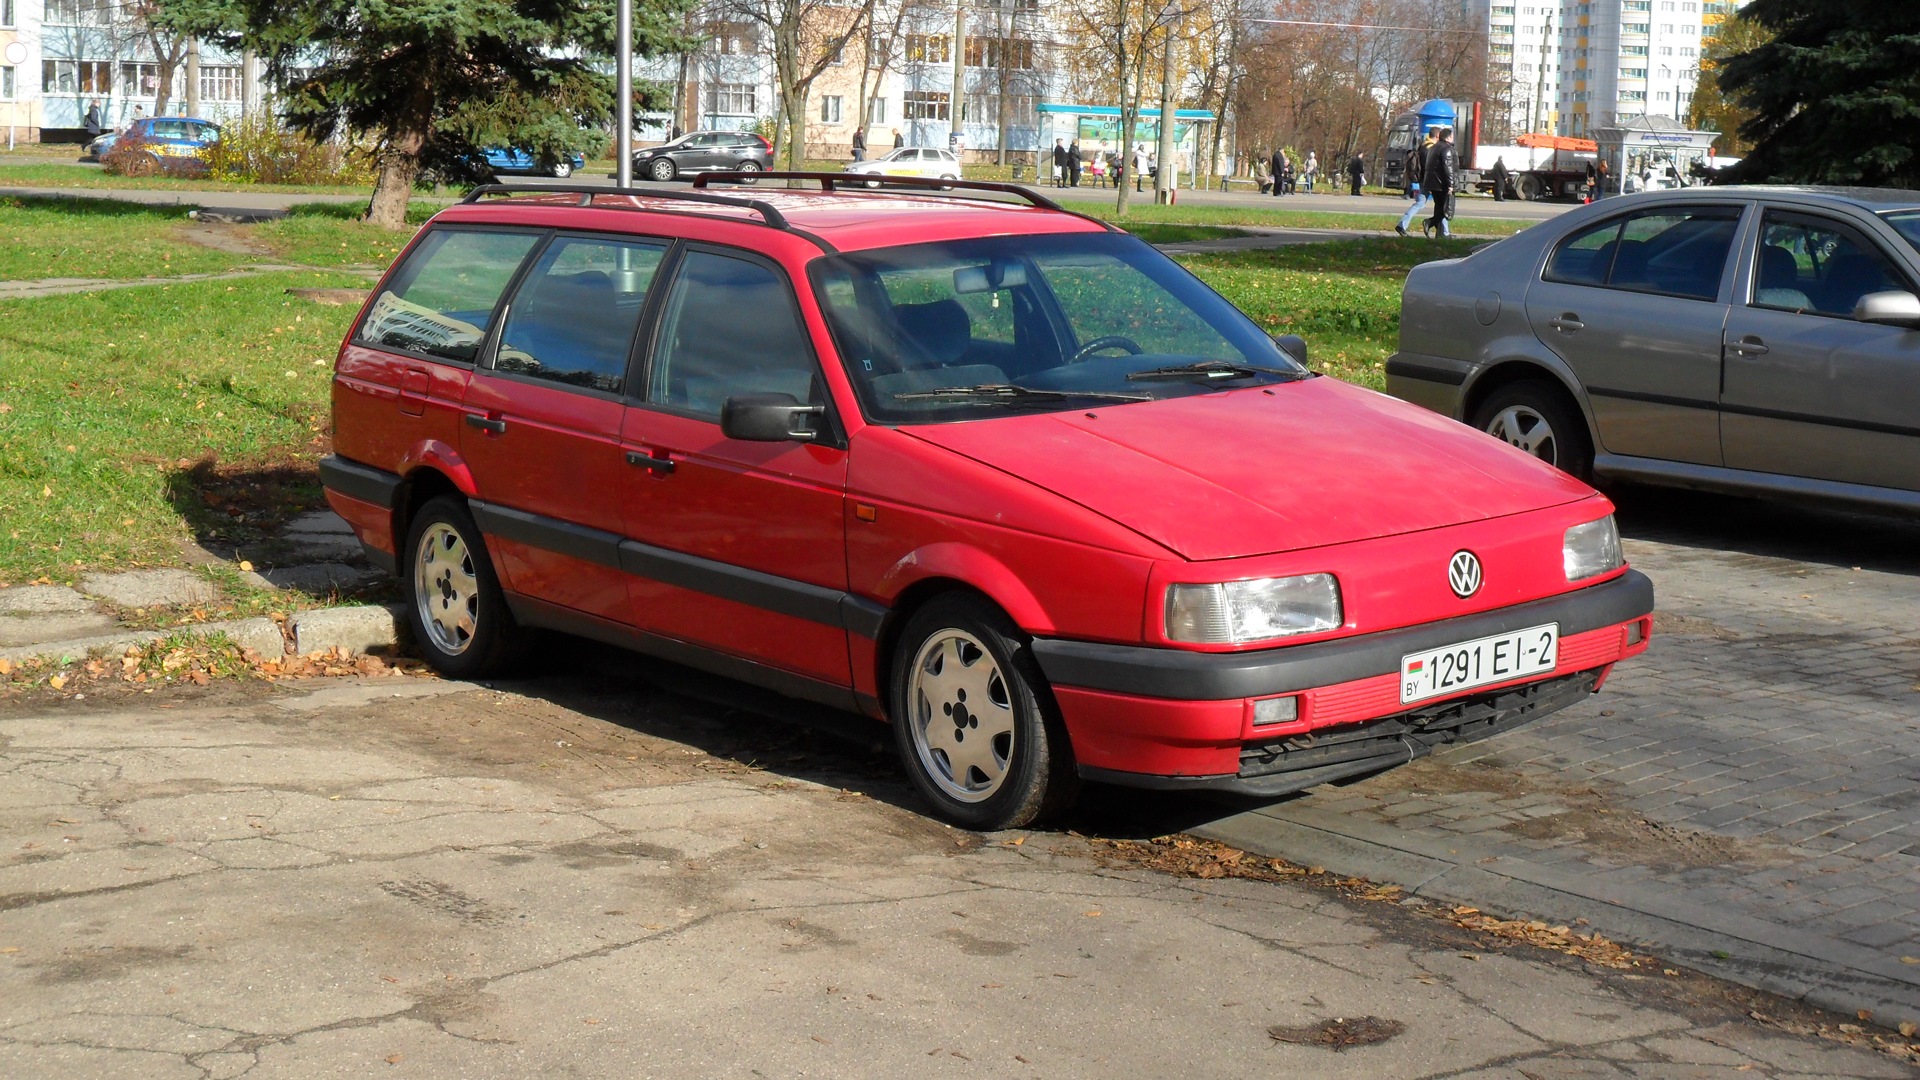 Фольксваген пассат 3 универсал. Фольксваген Пассат б3. Volkswagen Passat b3 универсал. Volkswagen Passat b3 variant. Пассат б3 1989.